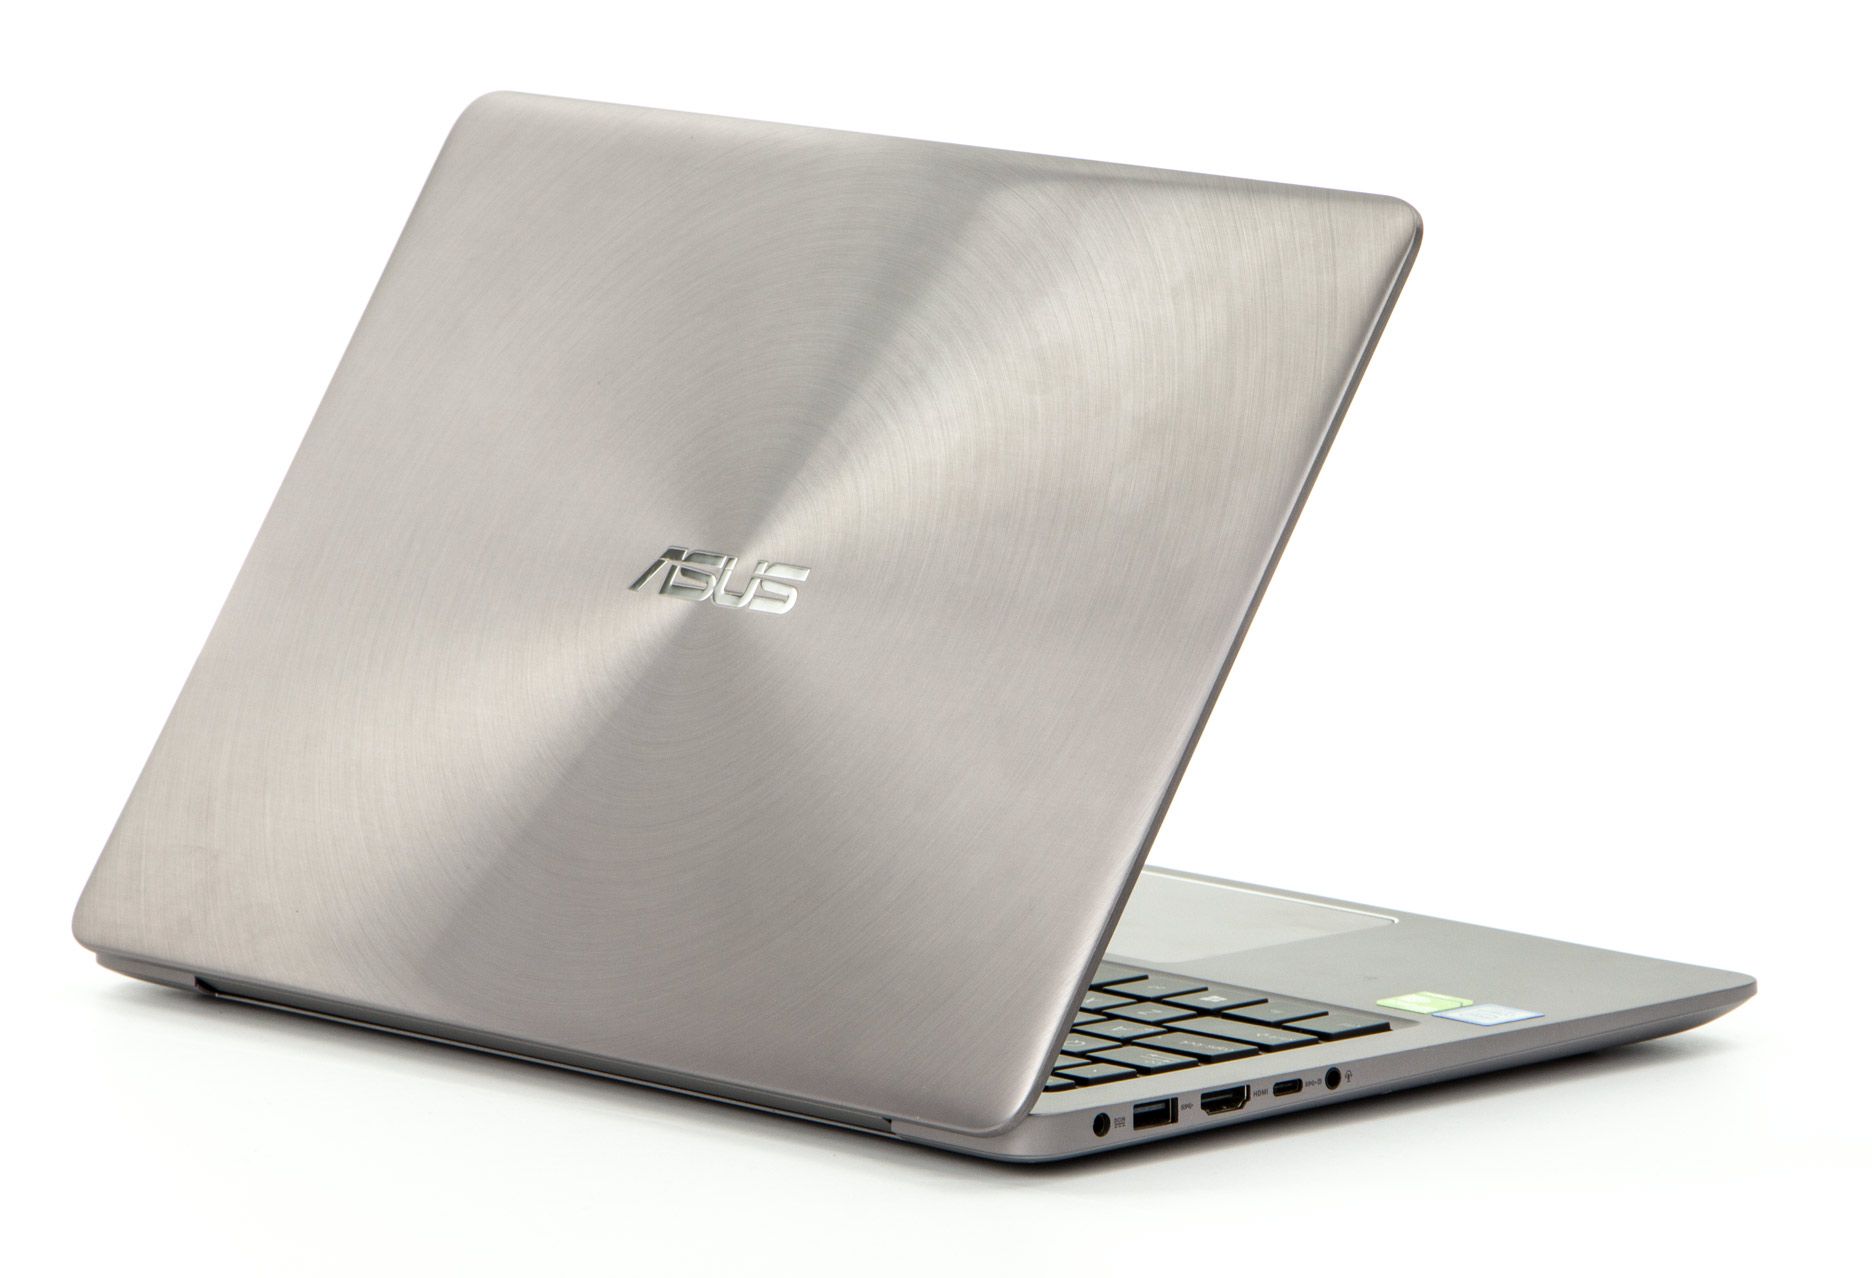 Asus Zenbook UX410, Asus Zenbook UX410 A 14-inch Ultrabook With Dedicated Graphics Memory, 